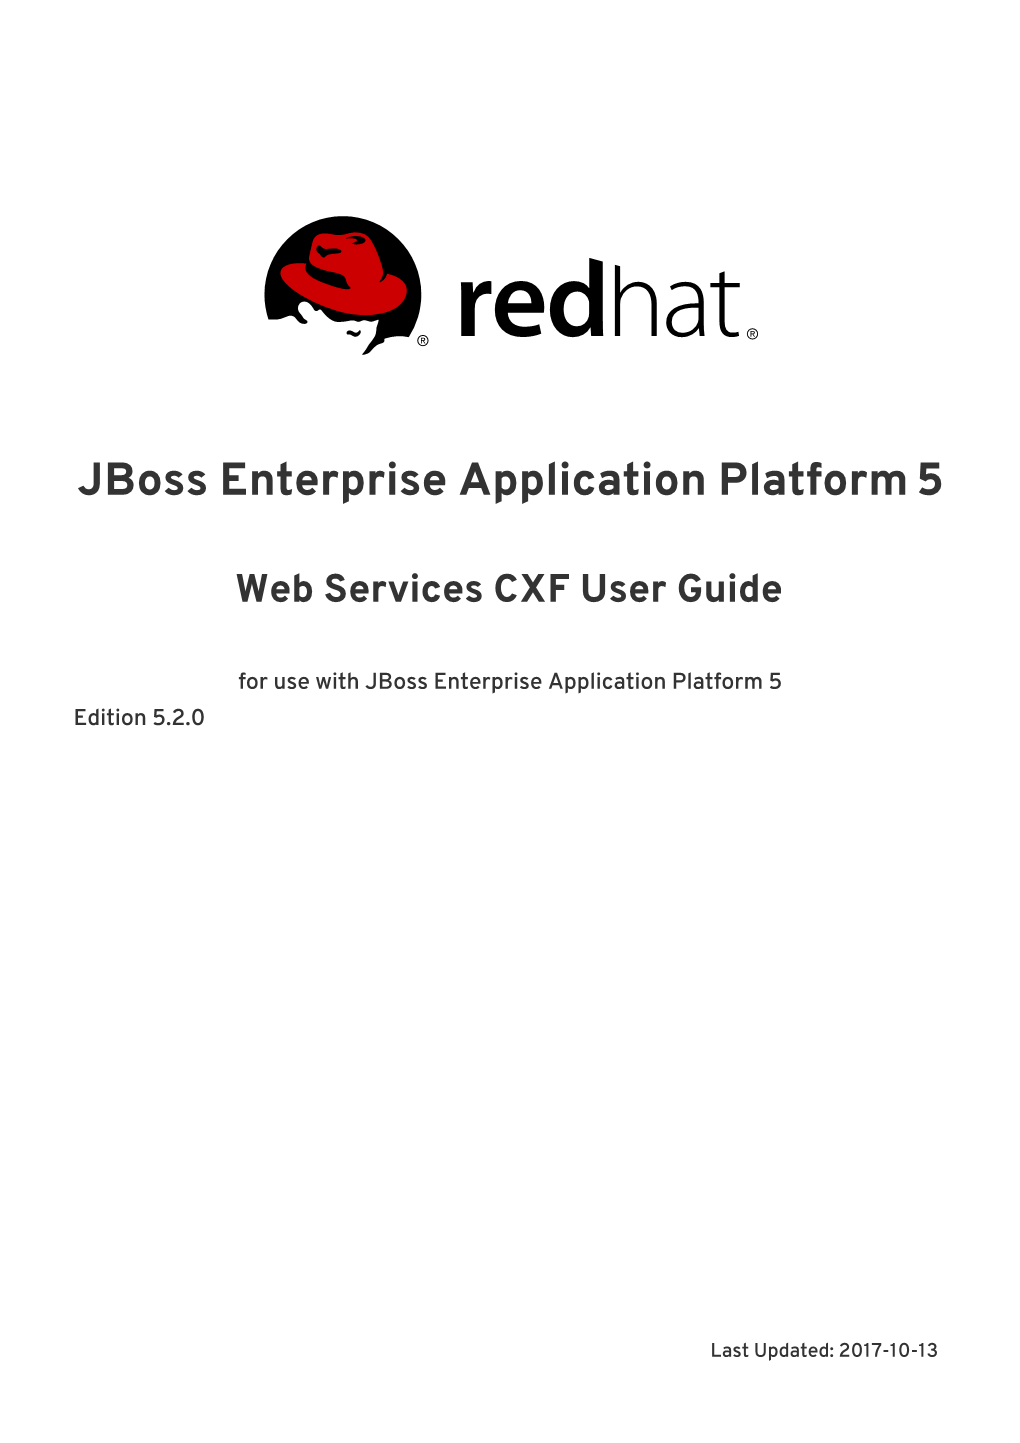 Web Services CXF User Guide